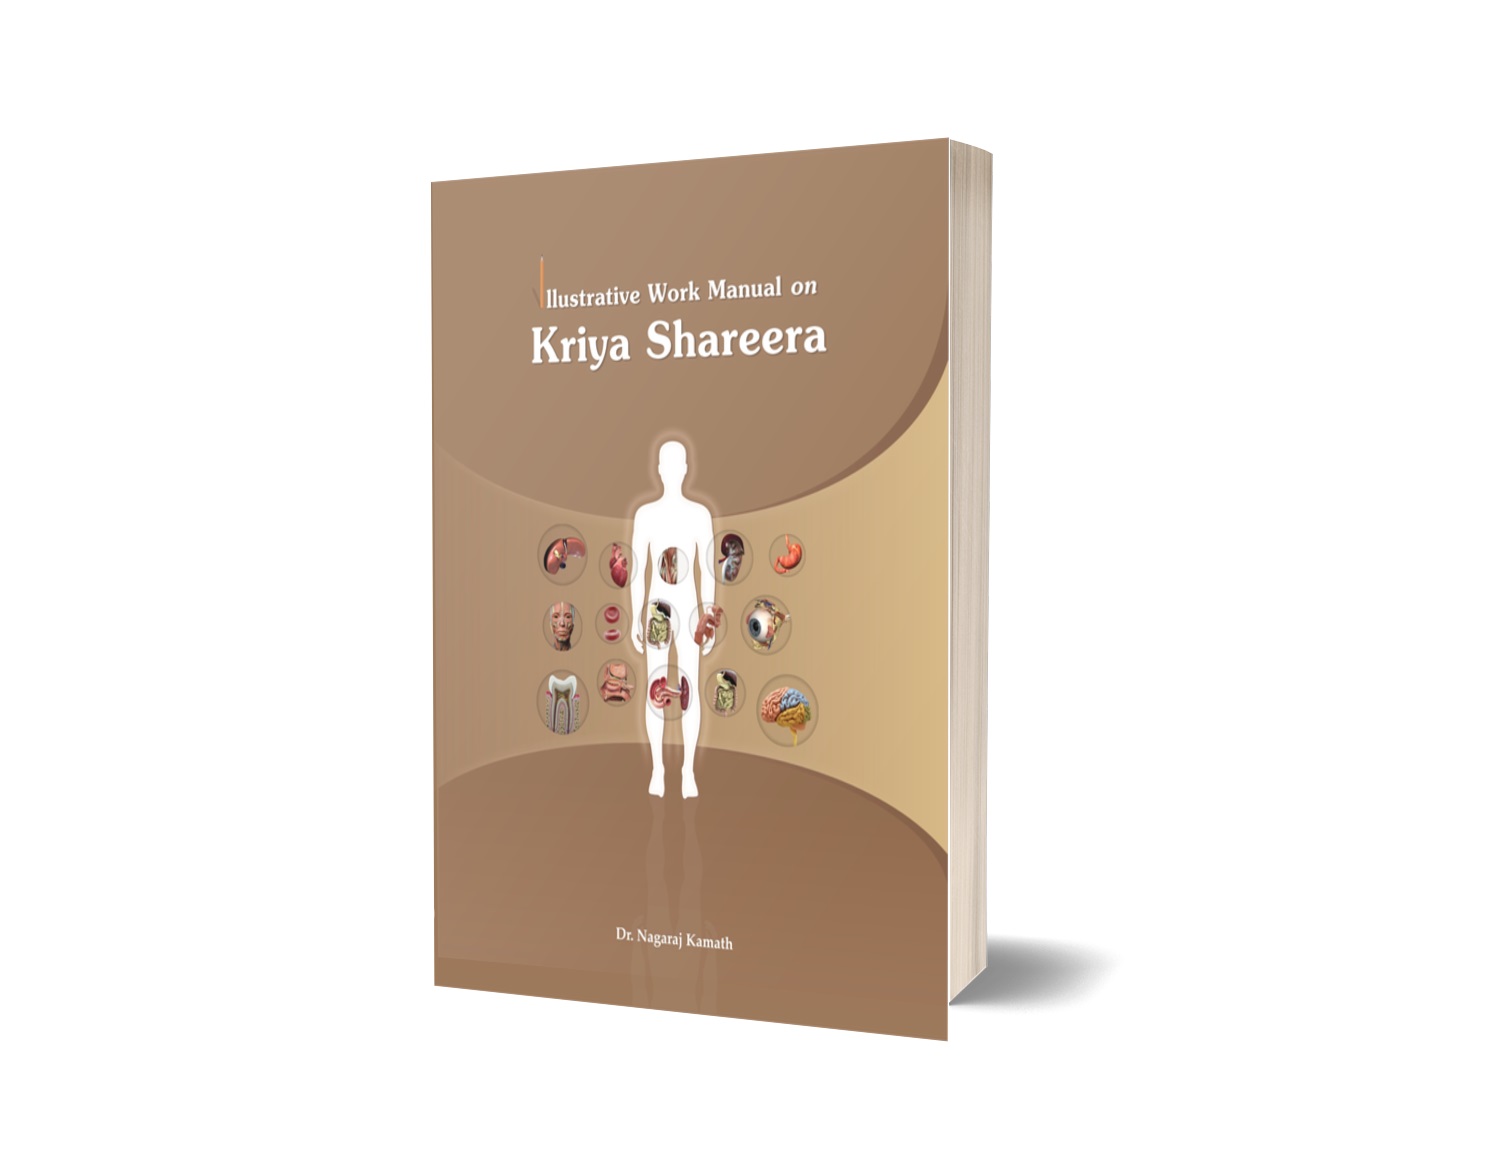 Illstrative Work Manual on Kriya Shareera